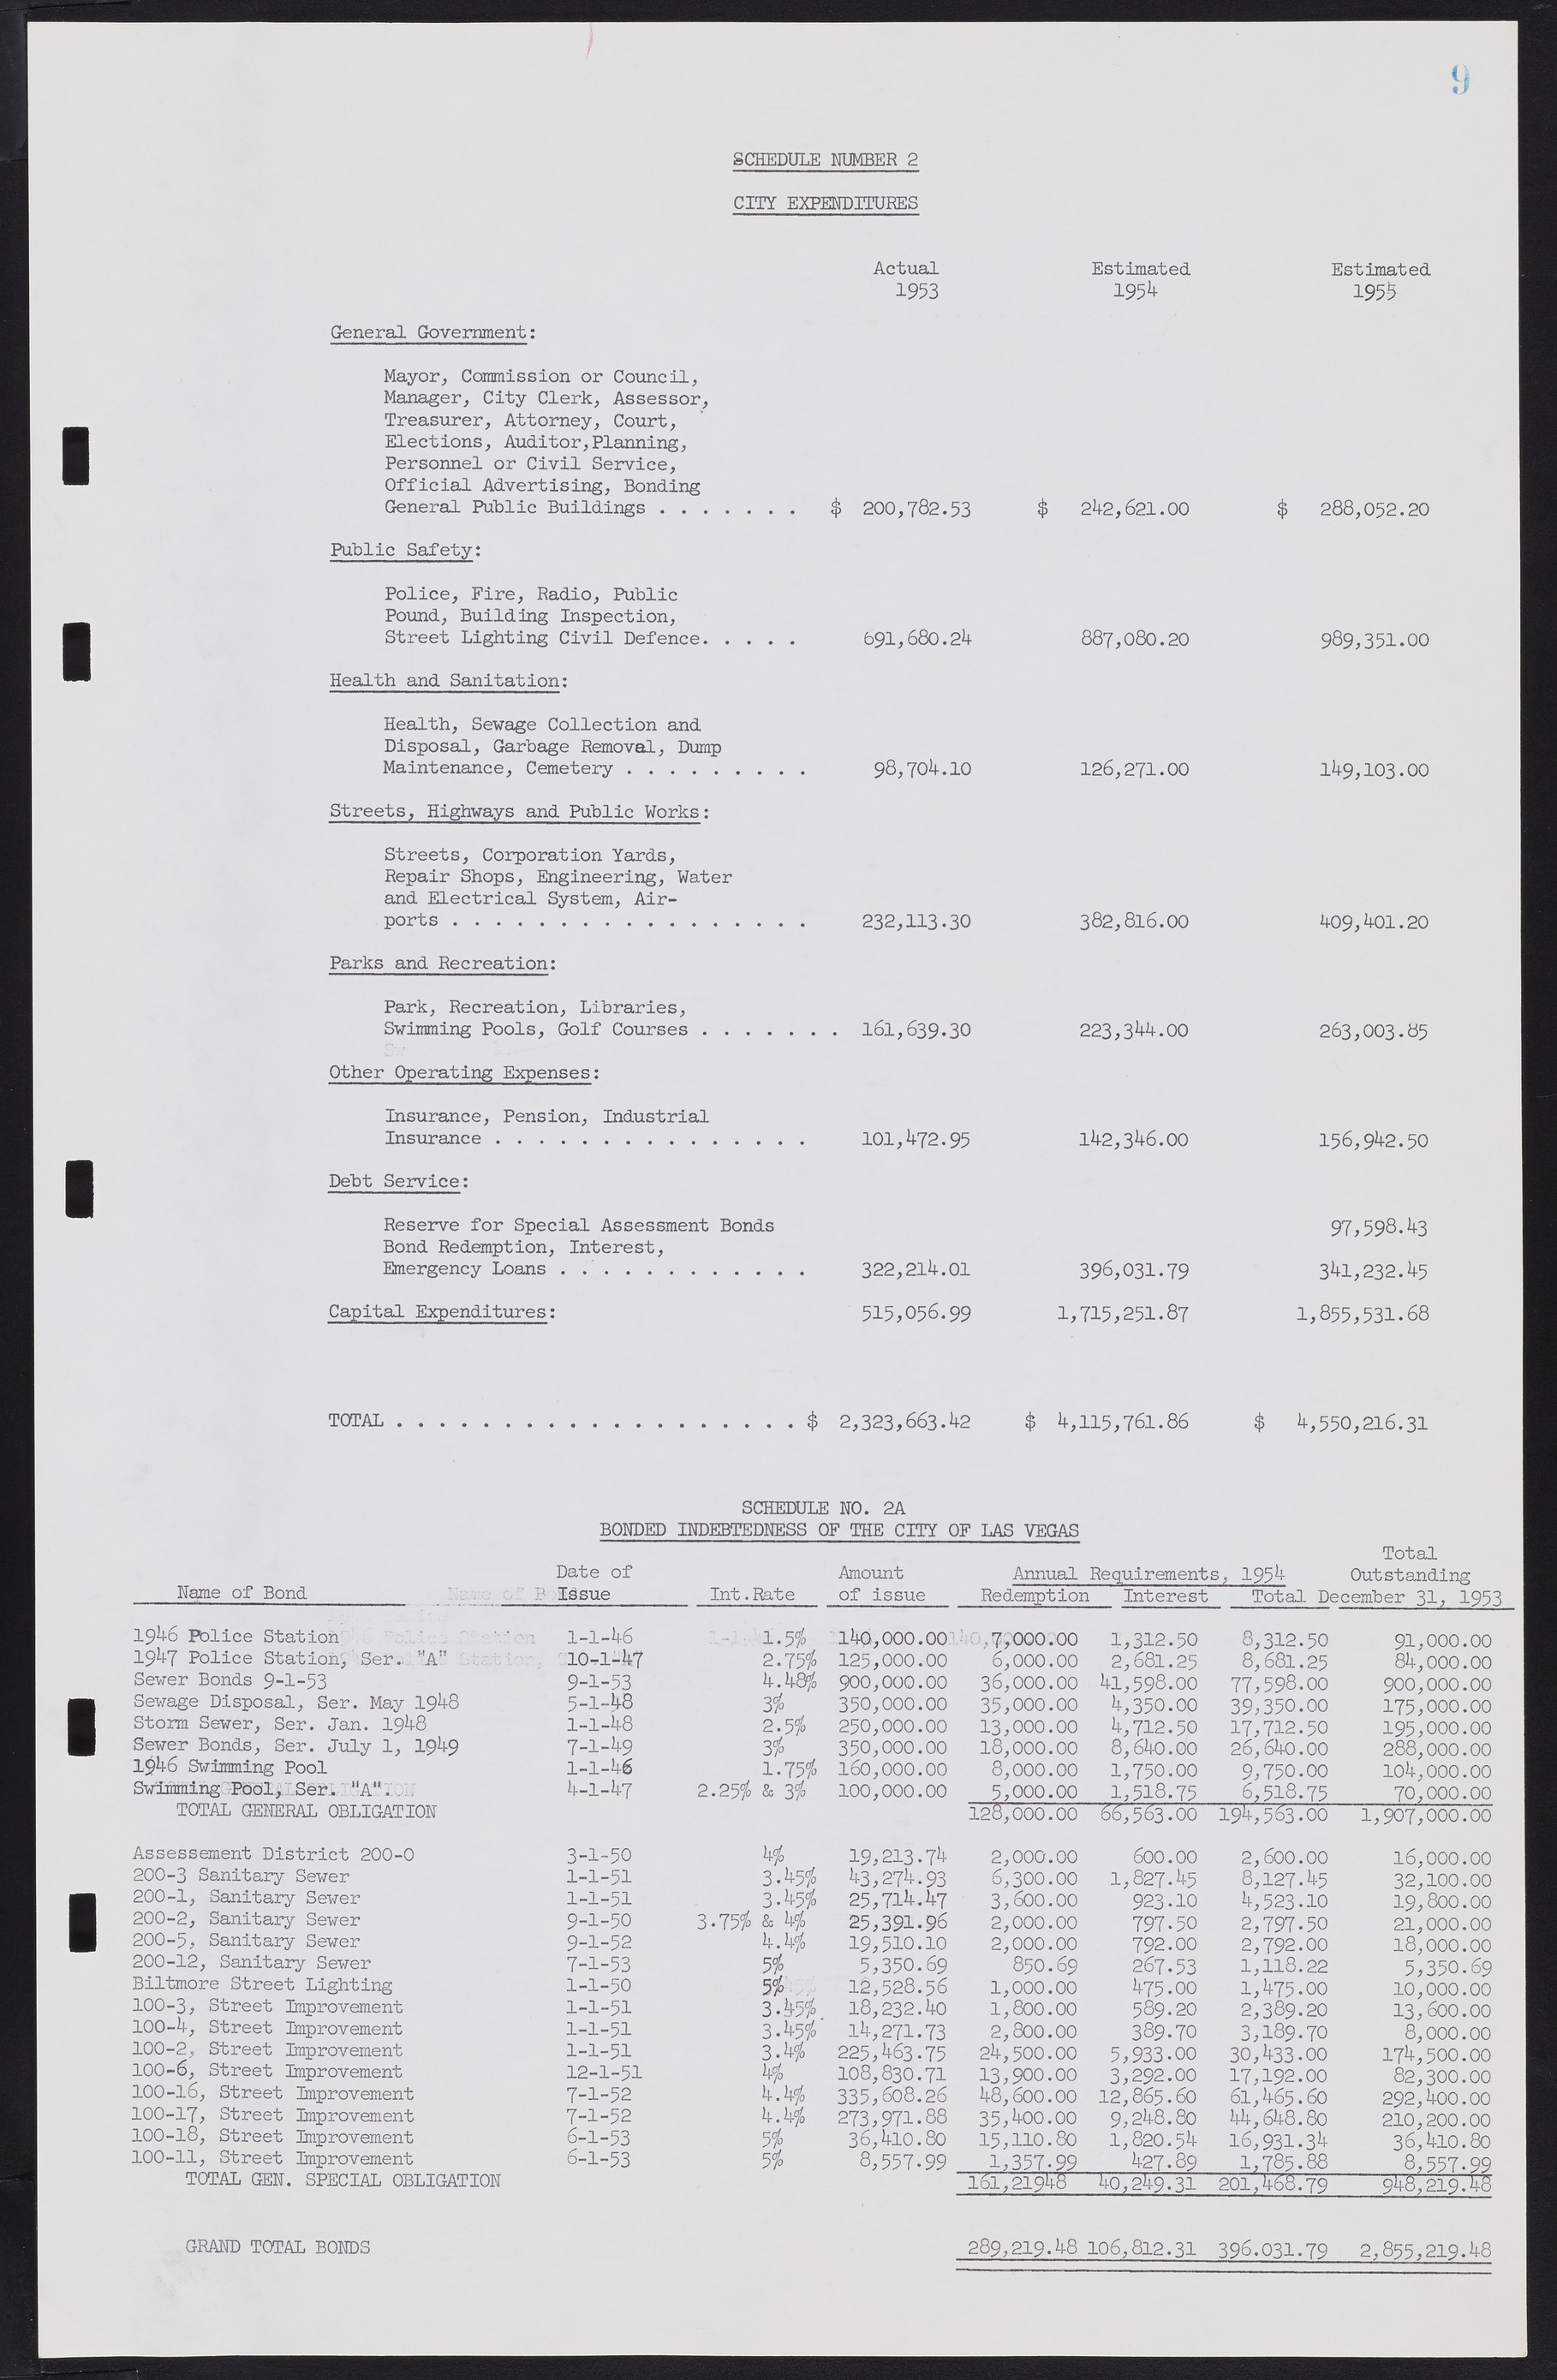 Las Vegas City Commission Minutes, February 17, 1954 to September 21, 1955, lvc000009-13